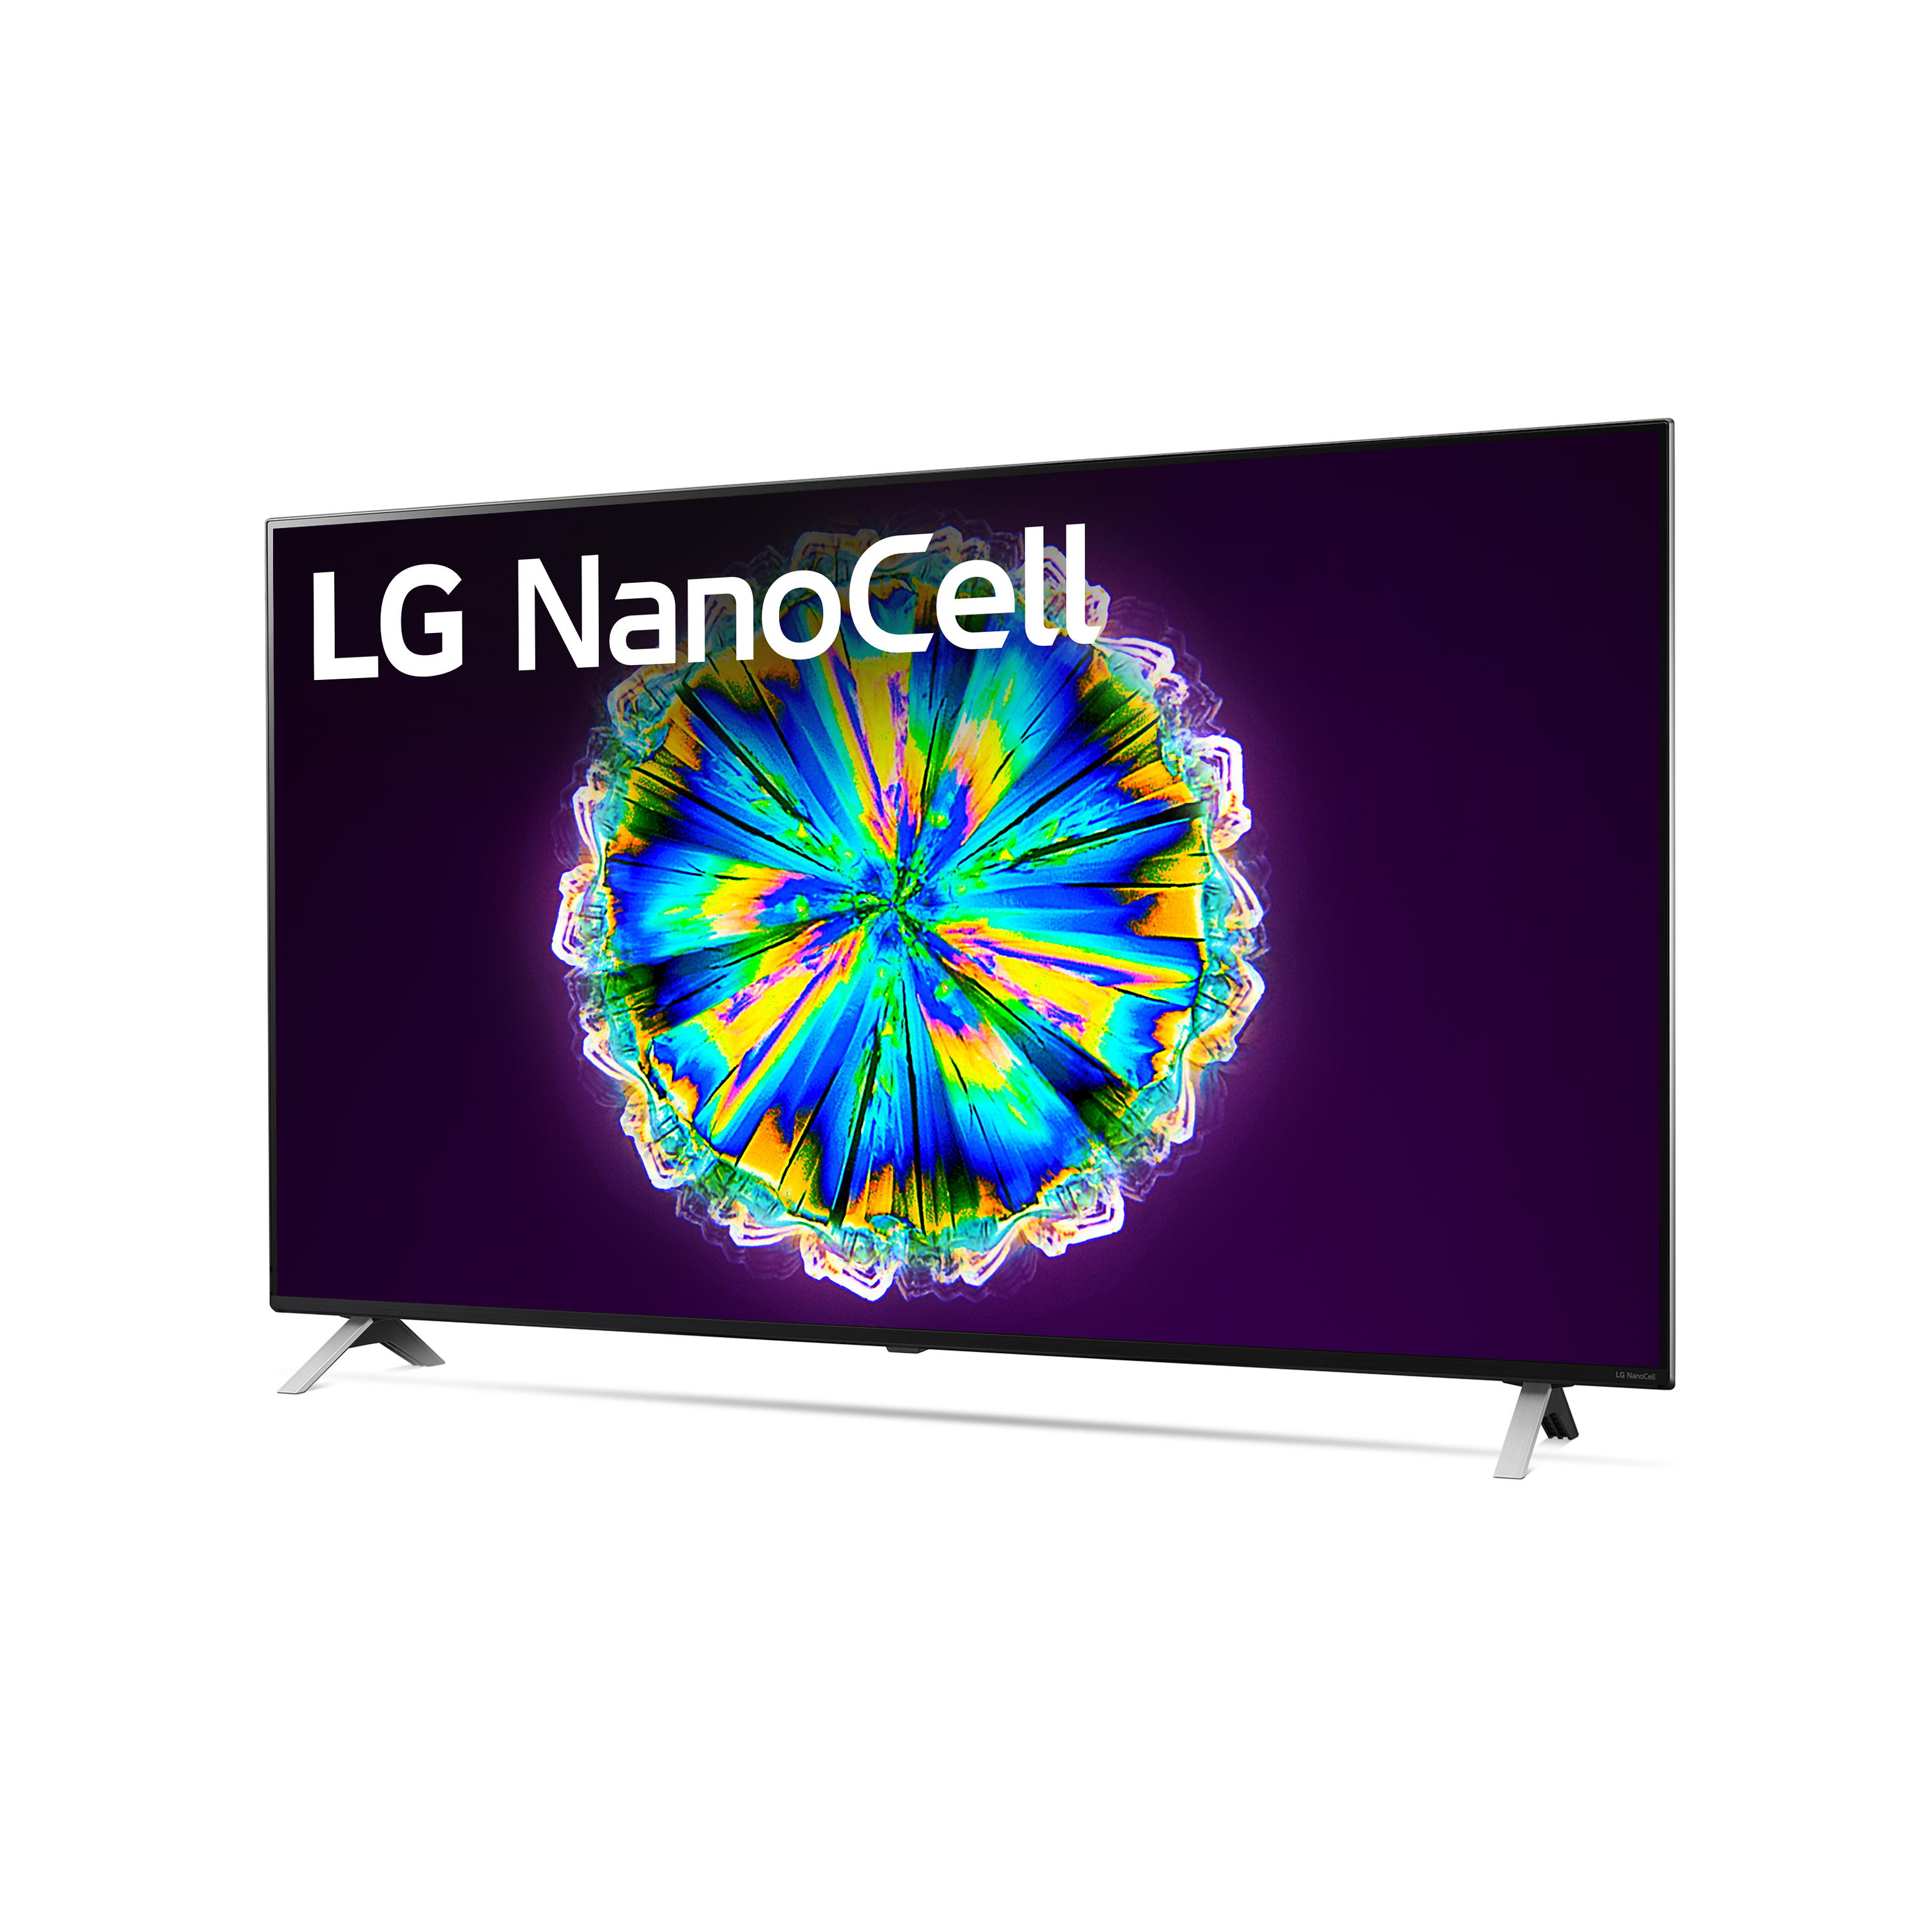 LG 49" Class 4K UHD 2160P NanoCell Smart TV with HDR 49NANO85UNA 2020 Model - image 5 of 17